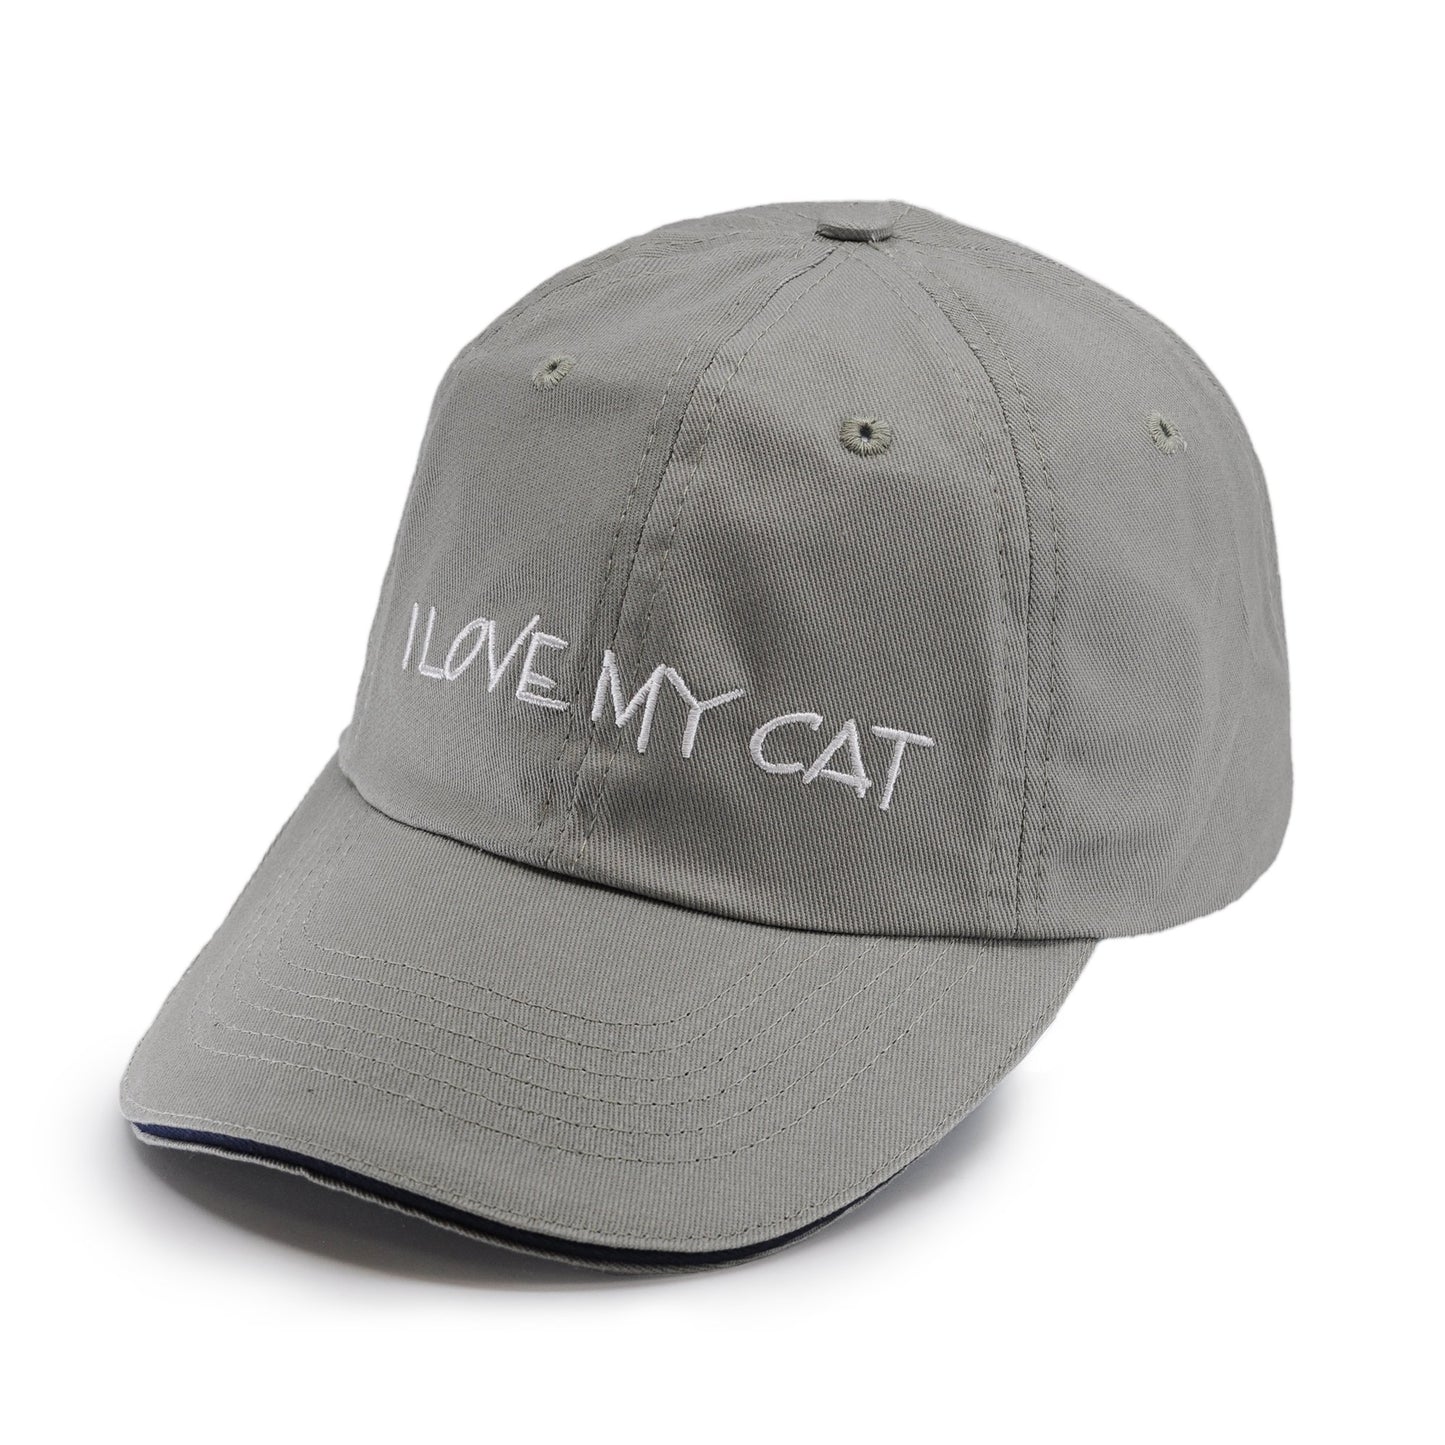 Pet Collection "I Love My Cat" 100% Cotton Adjustable Sports Cap.